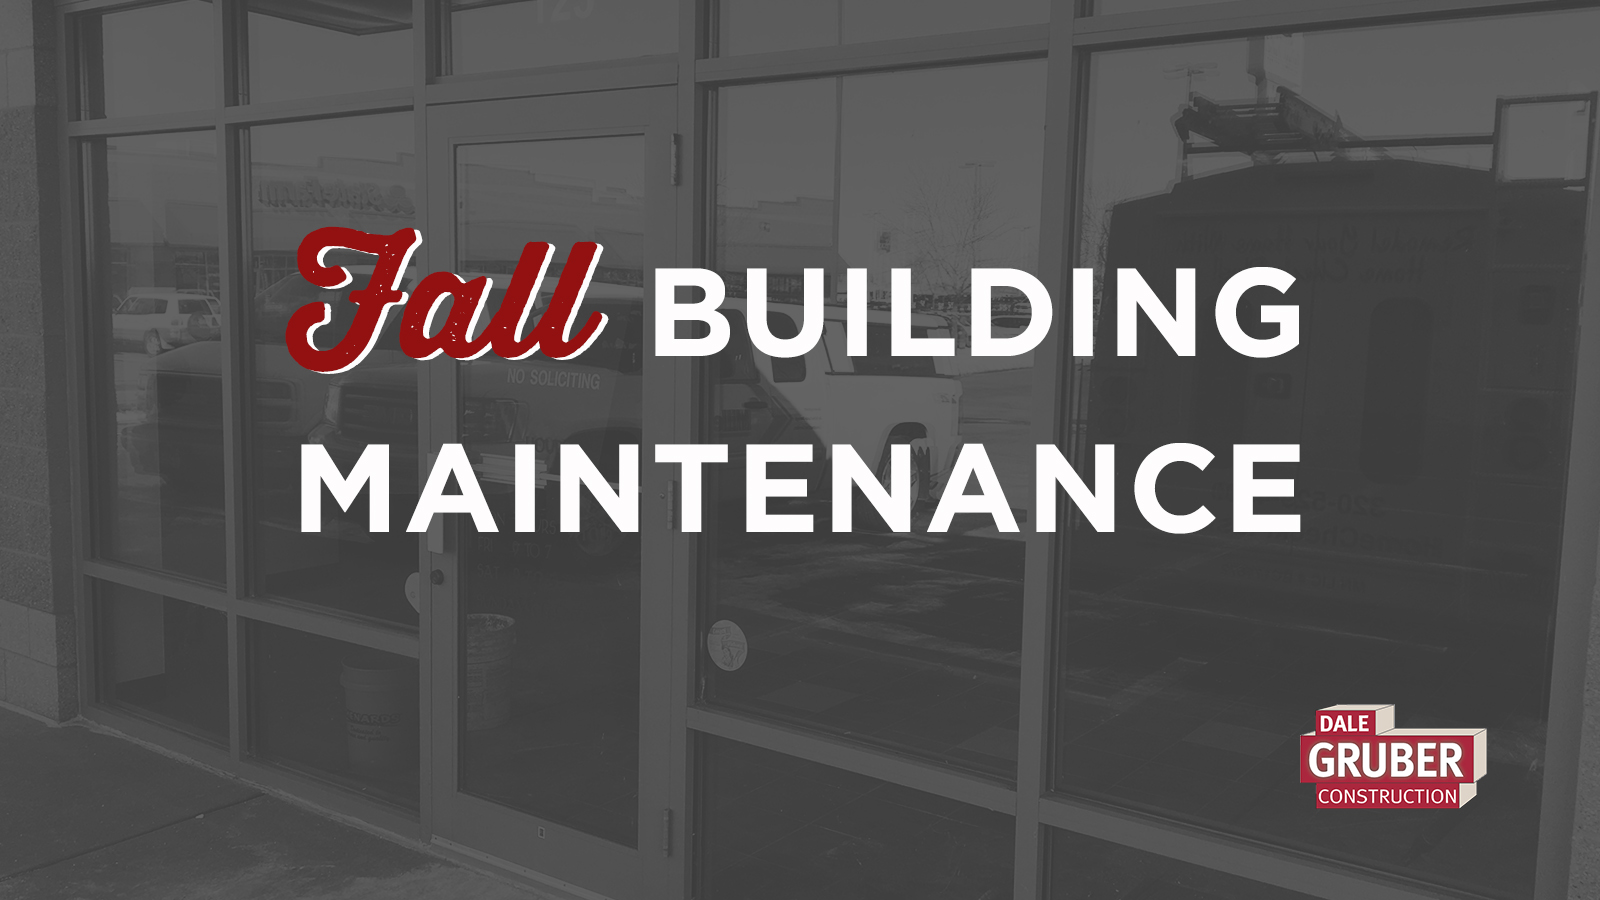 Fall Building Maintenance